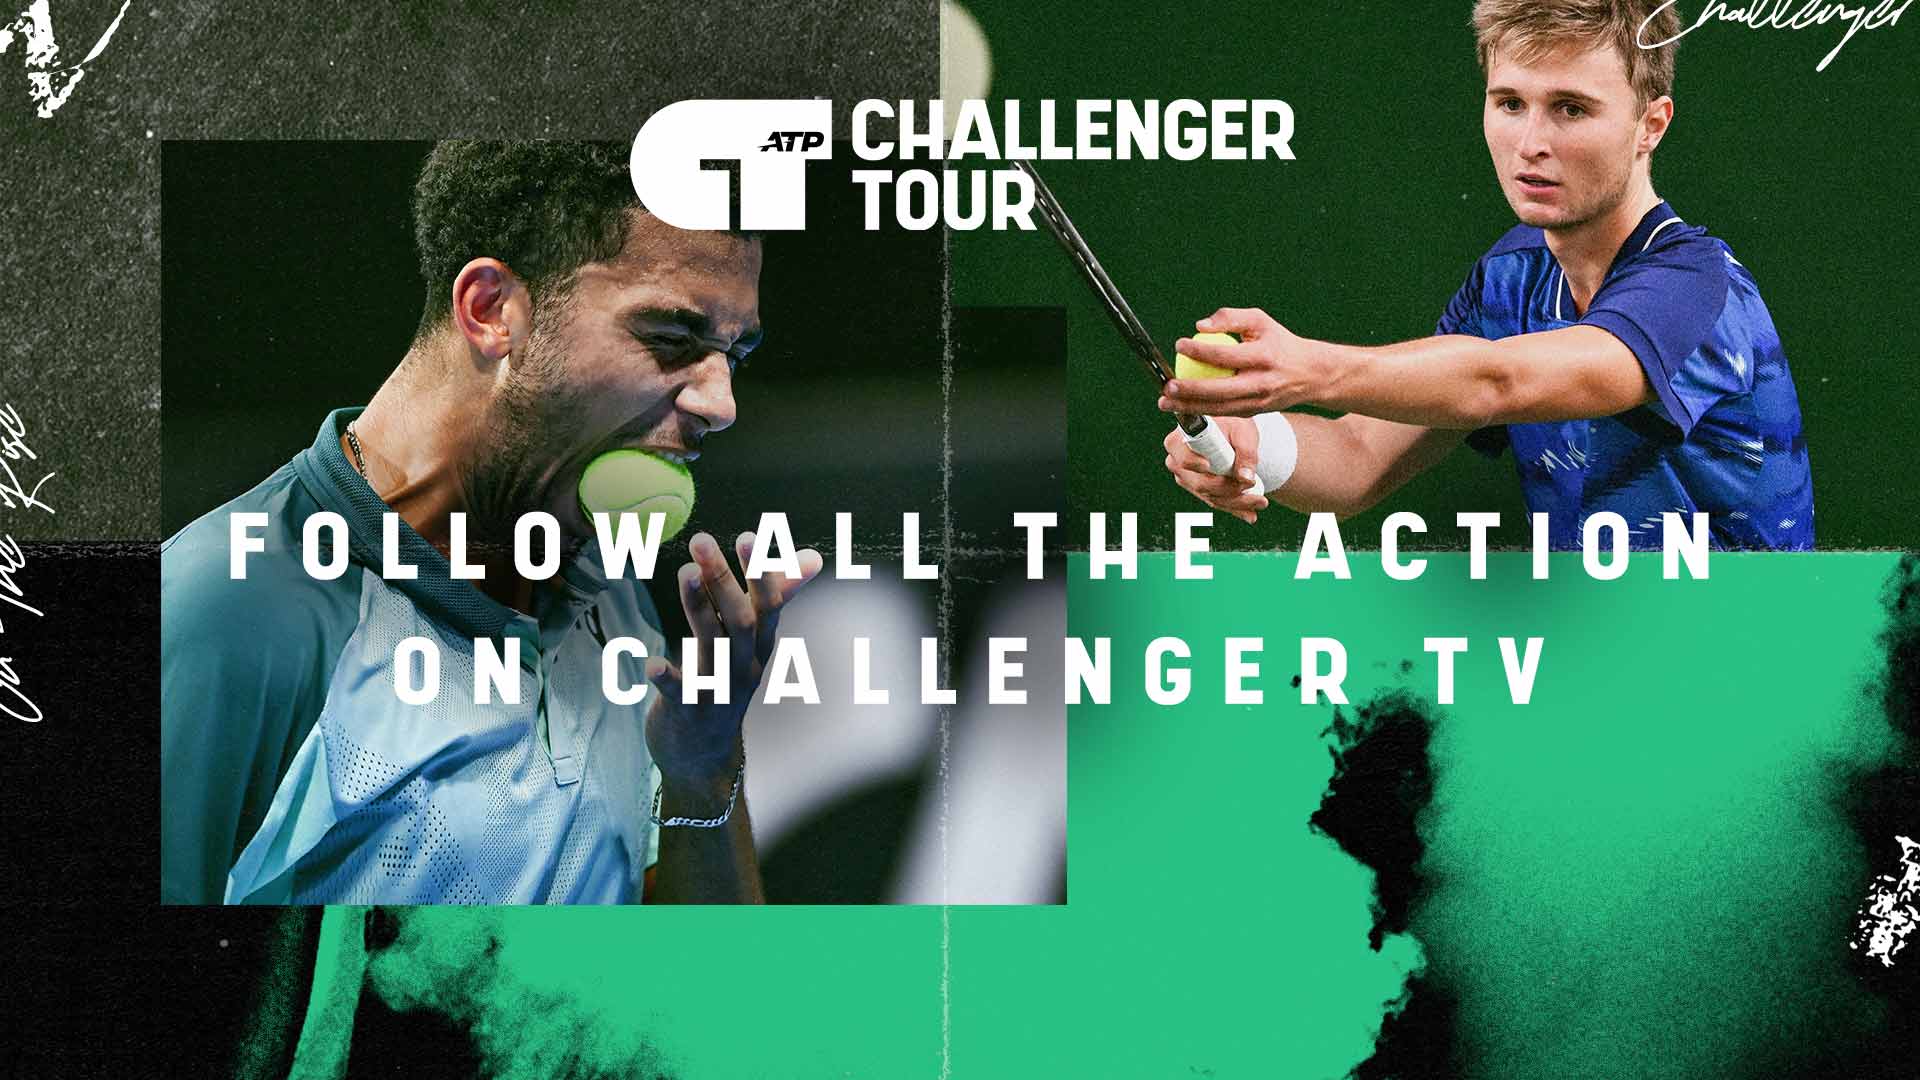 How To Watch ATP Challenger TV; View Schedule & Scores ATP Tour Tennis